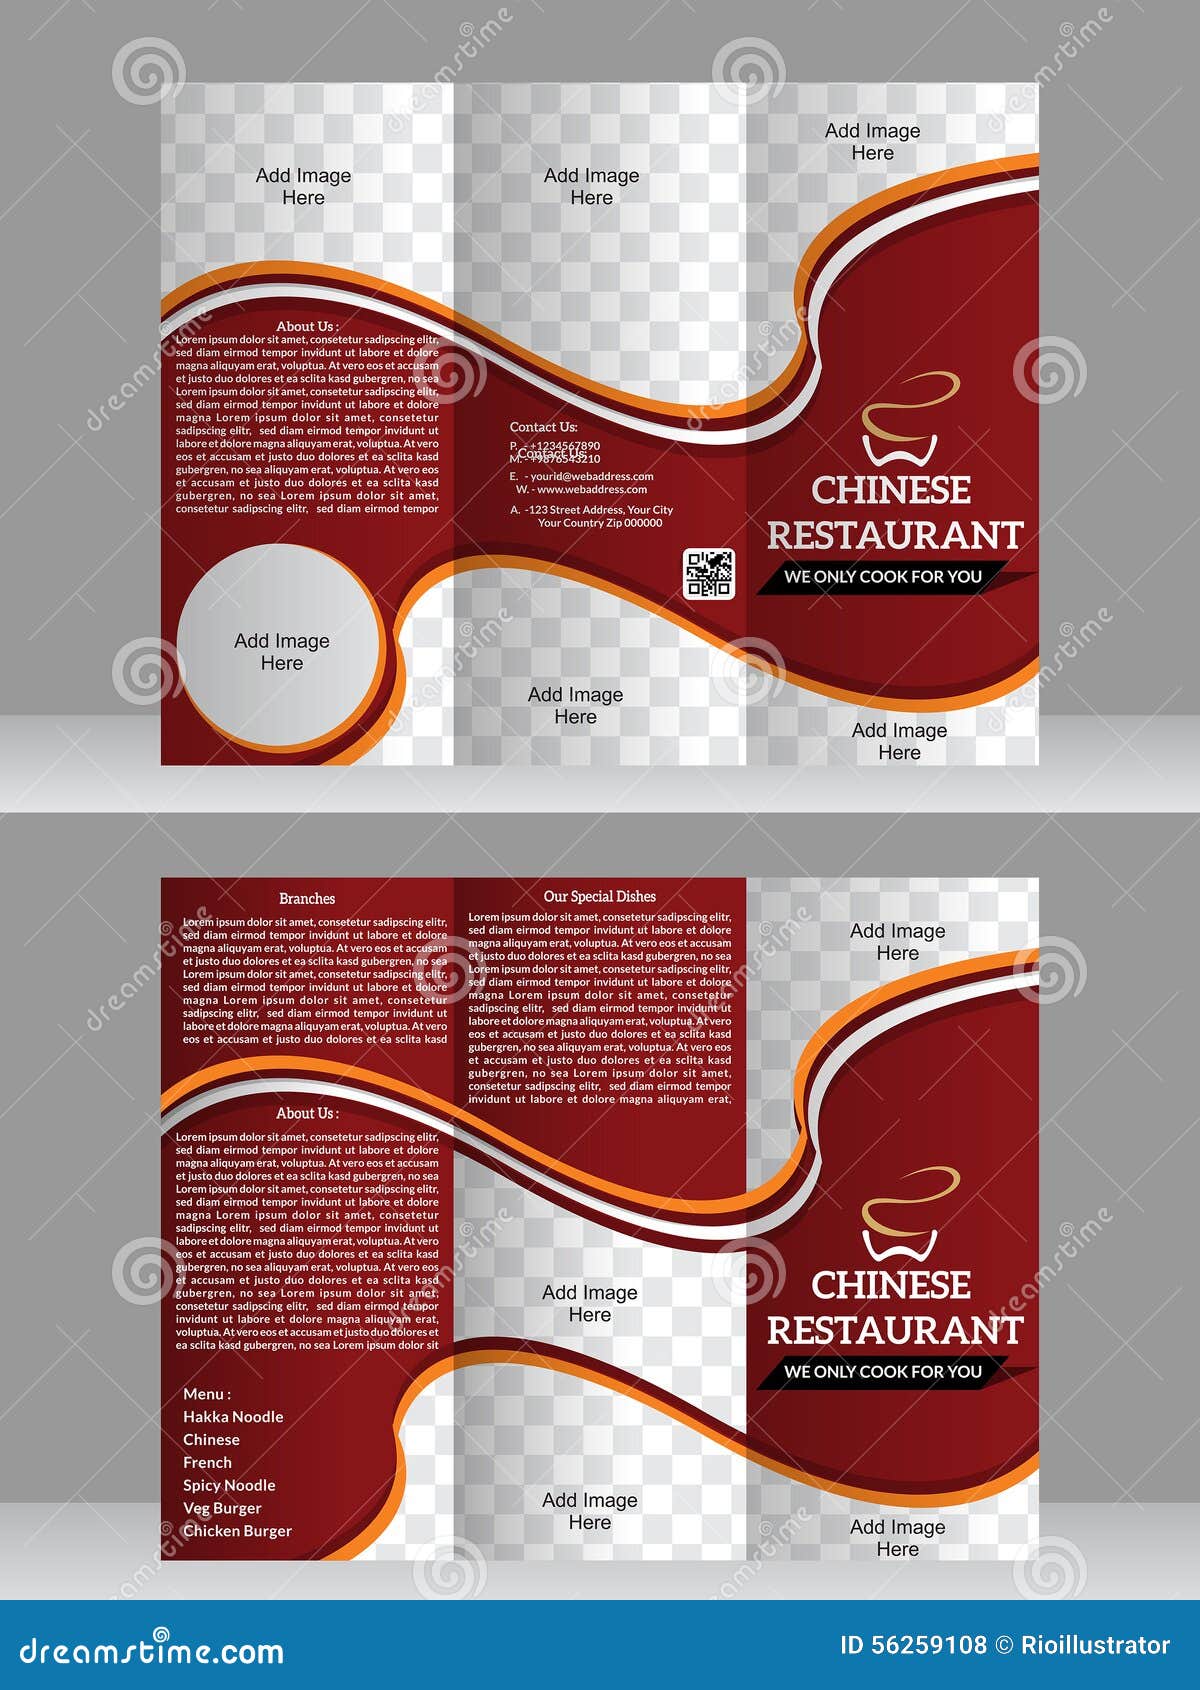 Sample business plan for restaurant and bar